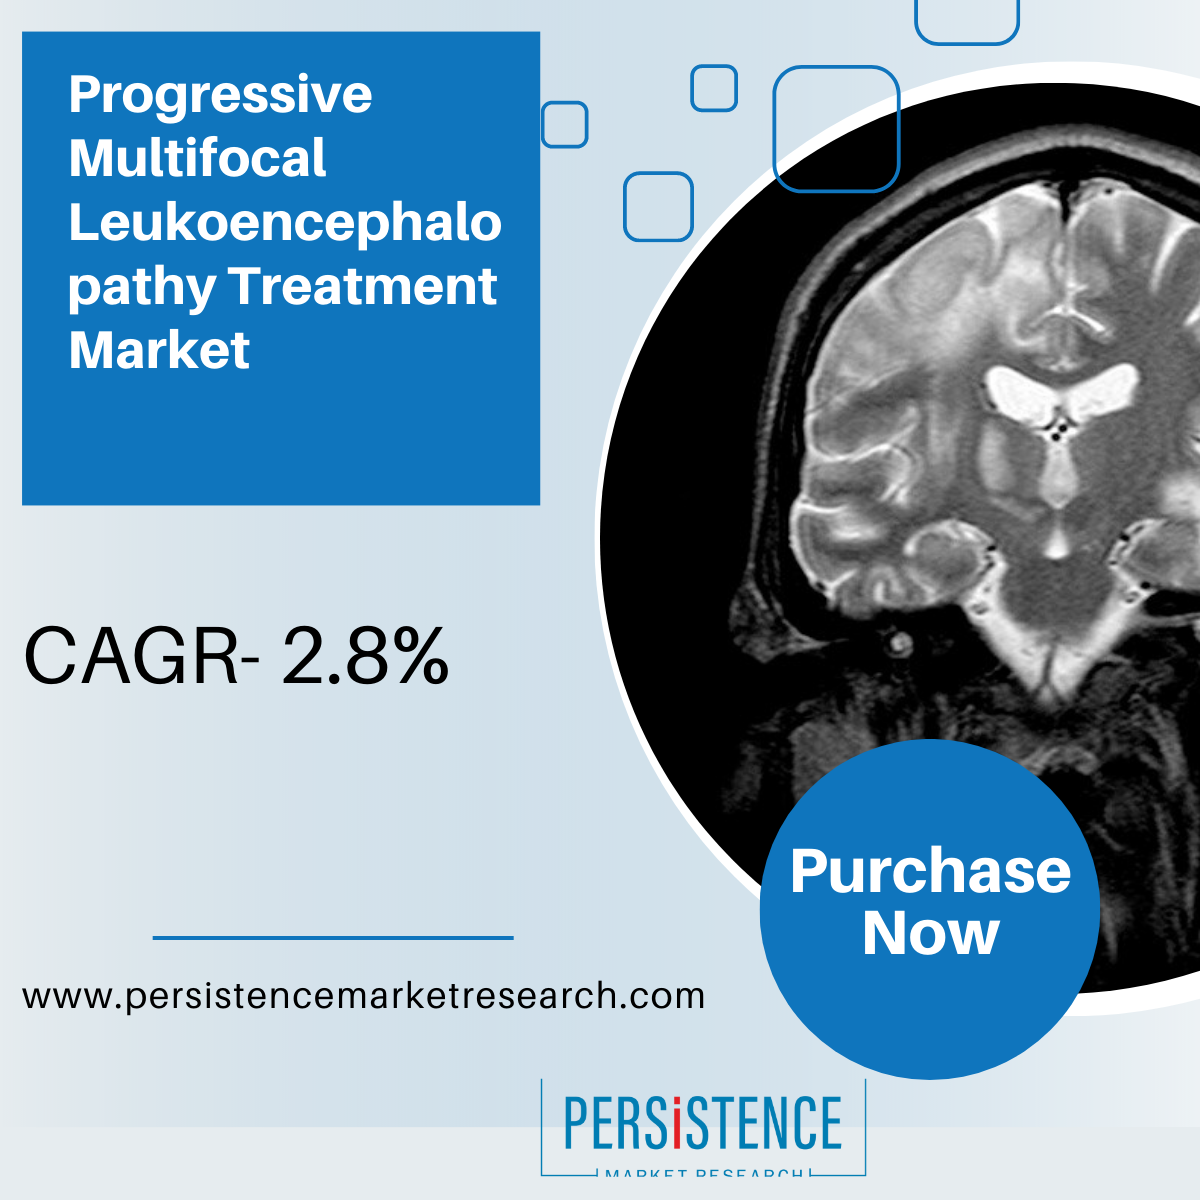 Progressive_Multifocal_Leukoencephalopathy_Treatment_Market